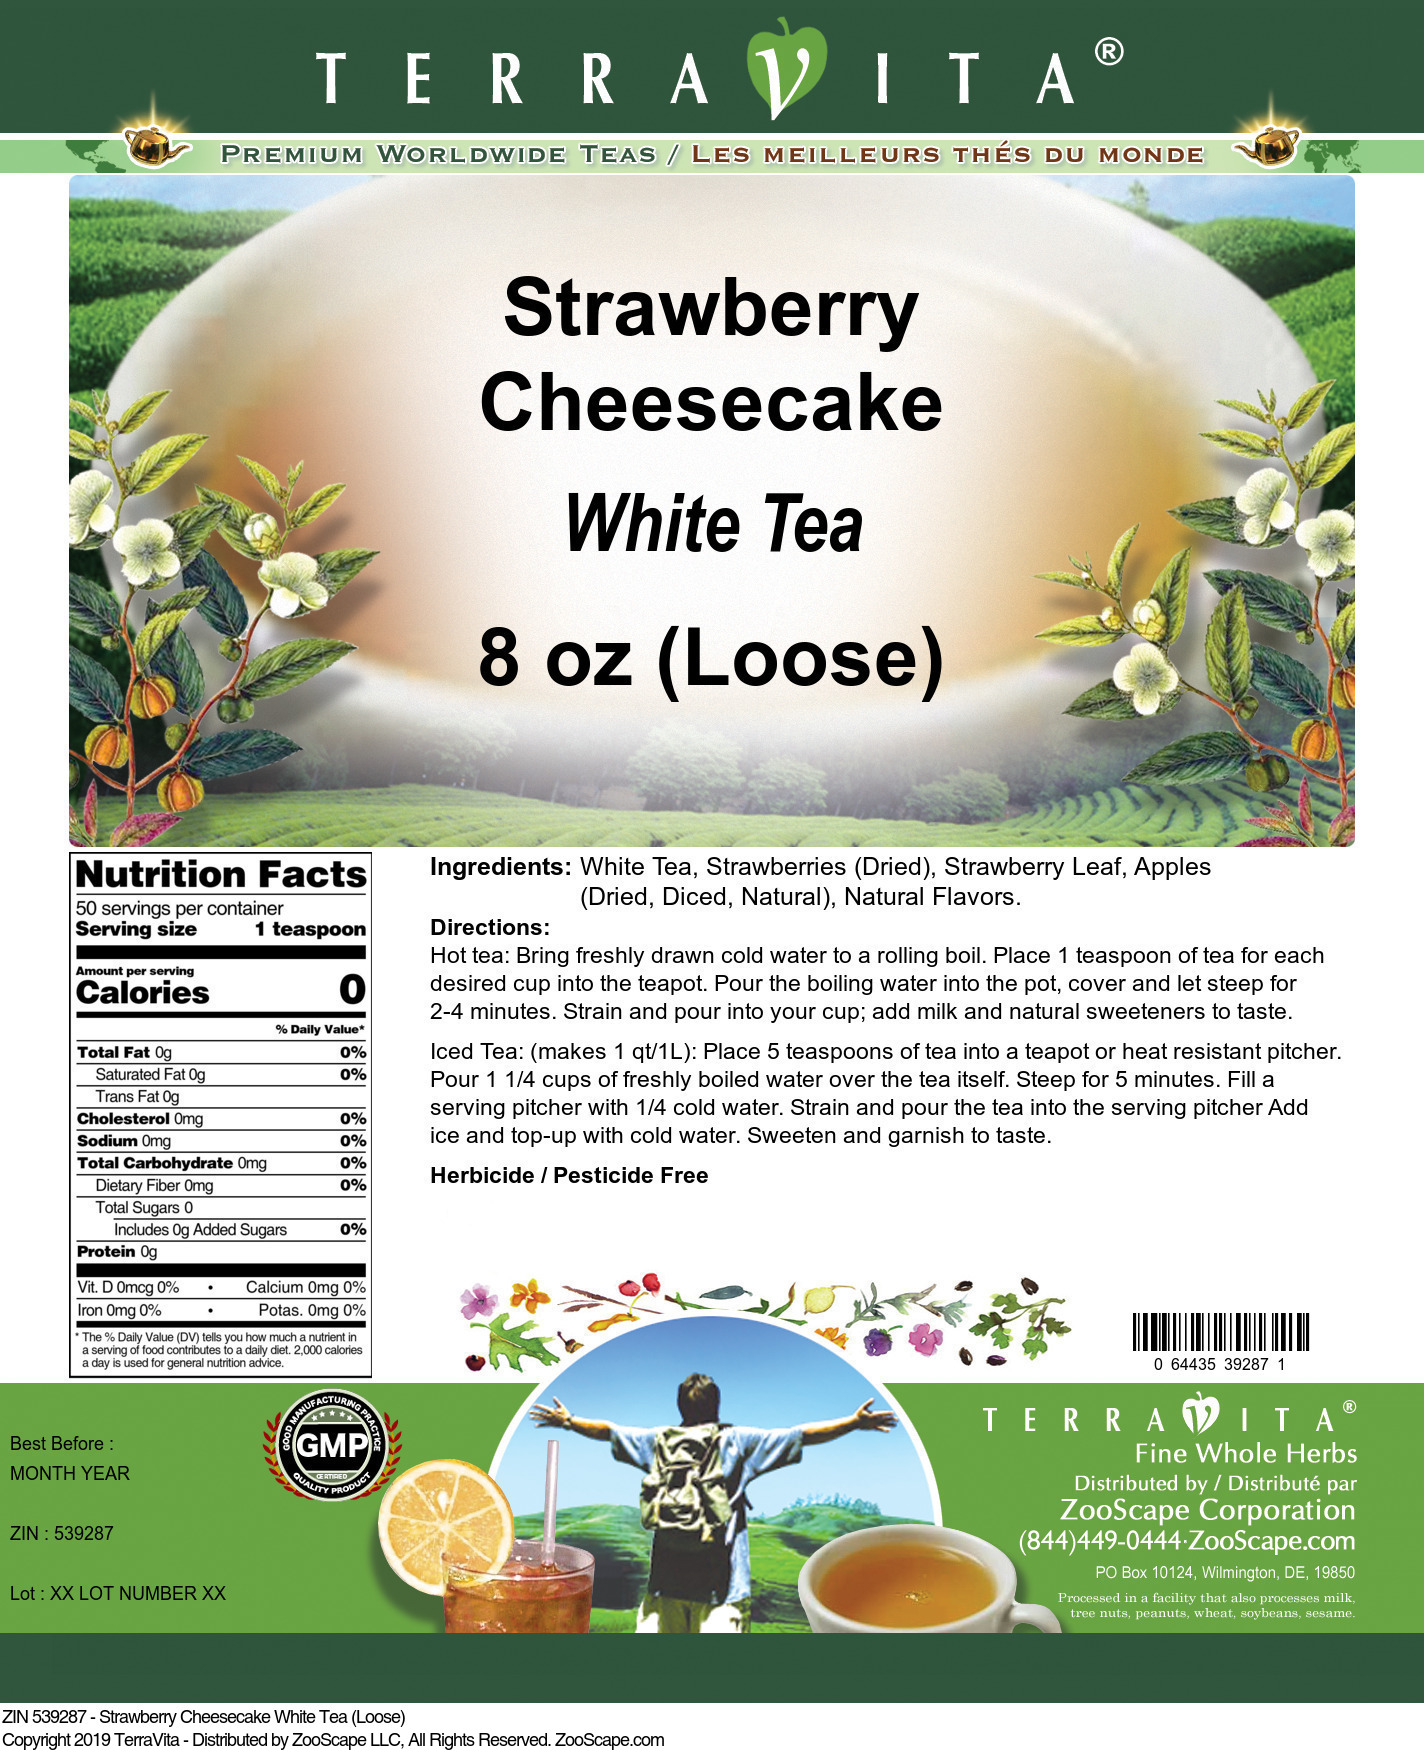 Strawberry Cheesecake White Tea (Loose) - Label